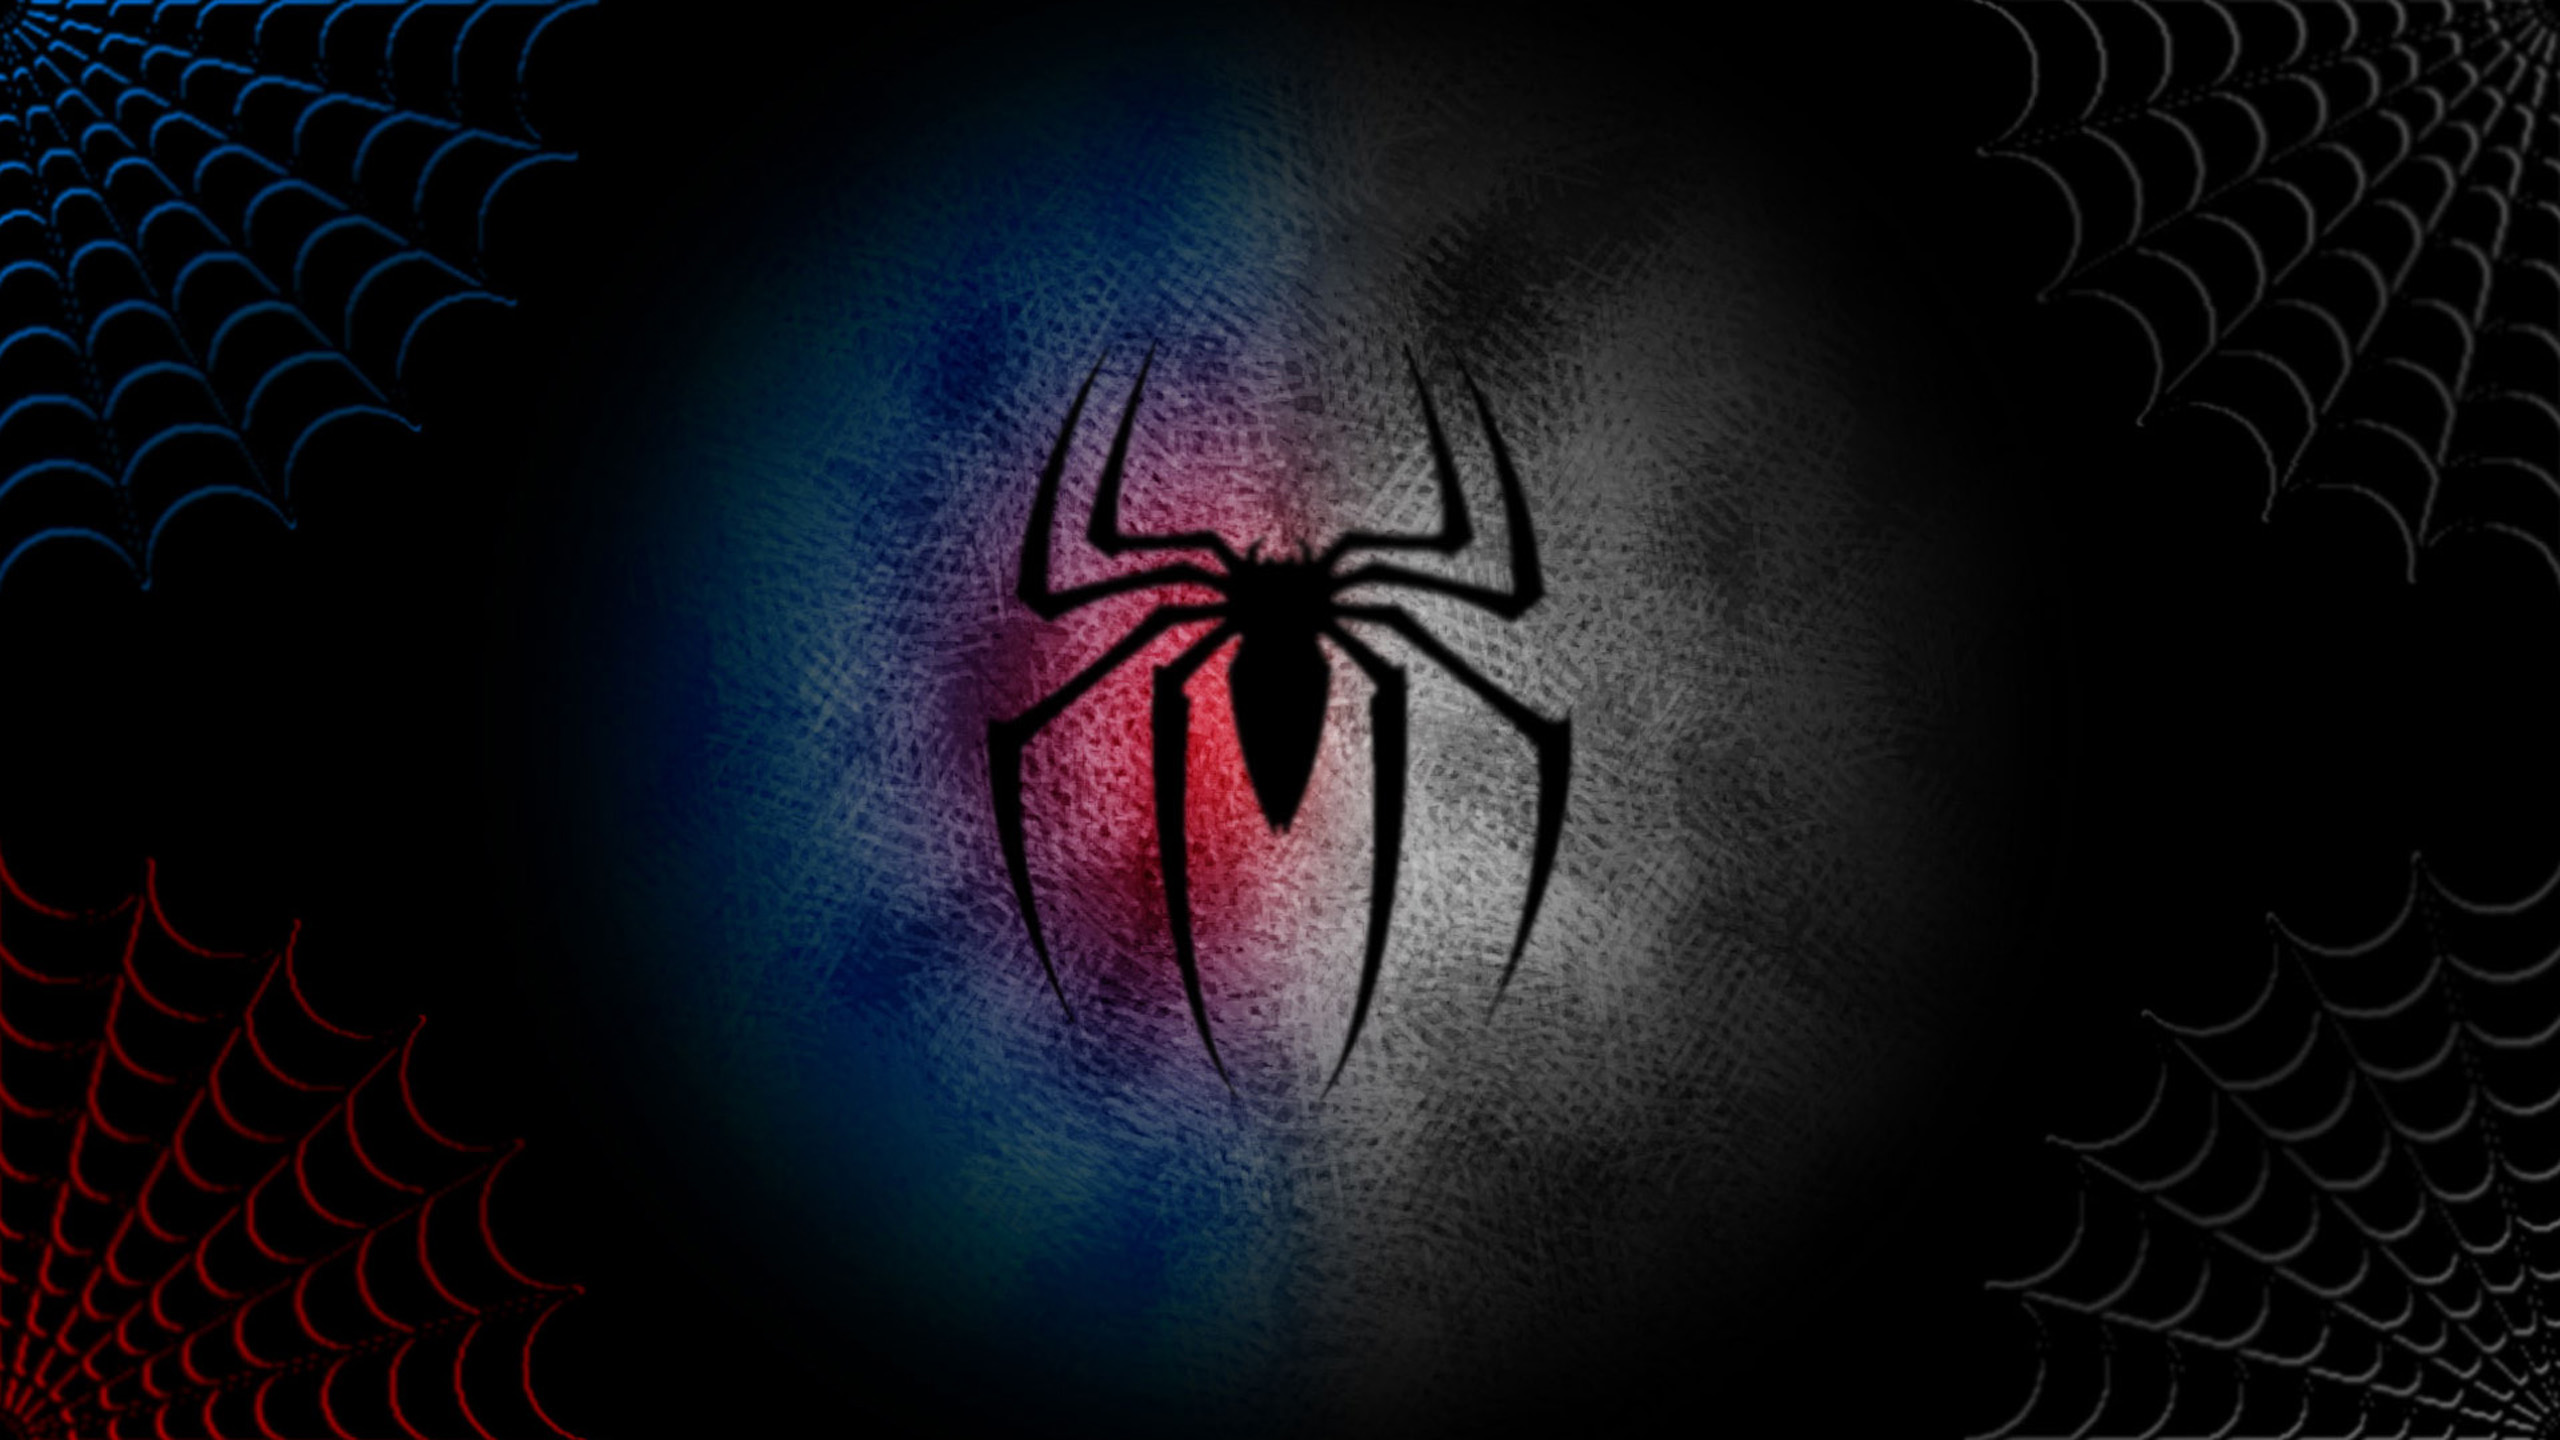 Spiderman logo wallpaper, HD Desktop Wallpapers